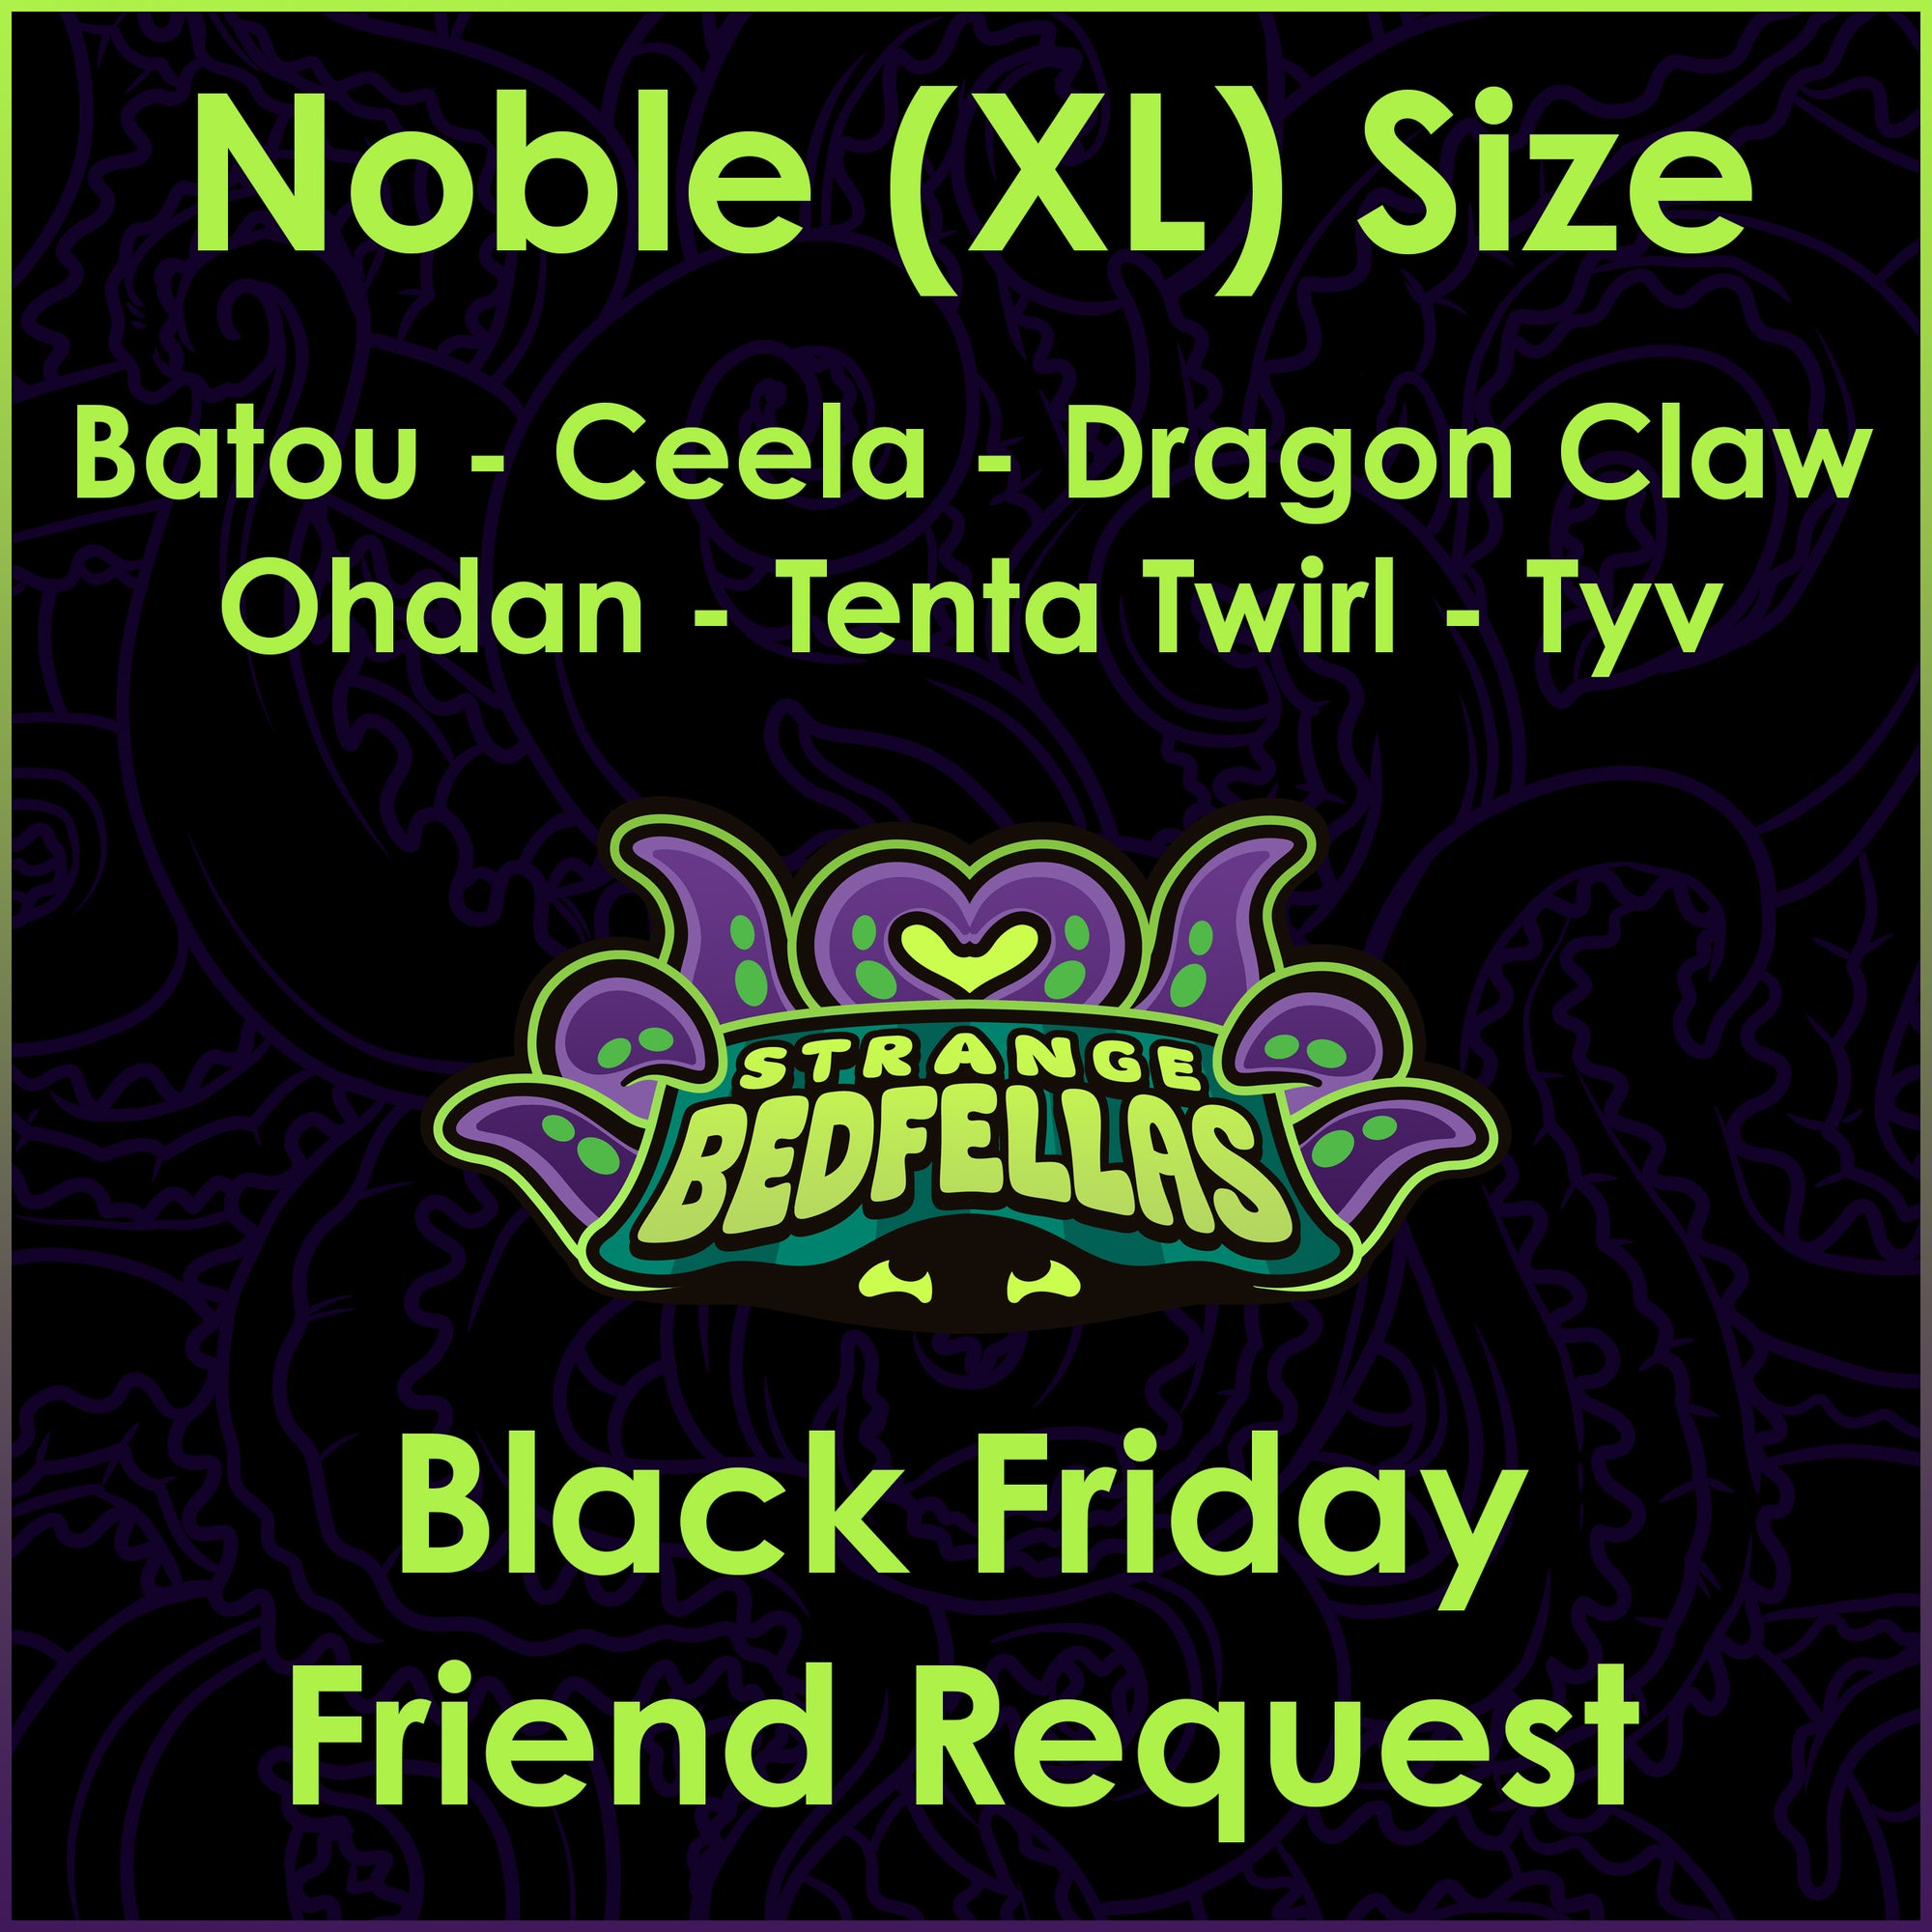 Black Friday Friend Request -- Noble (XL) Size